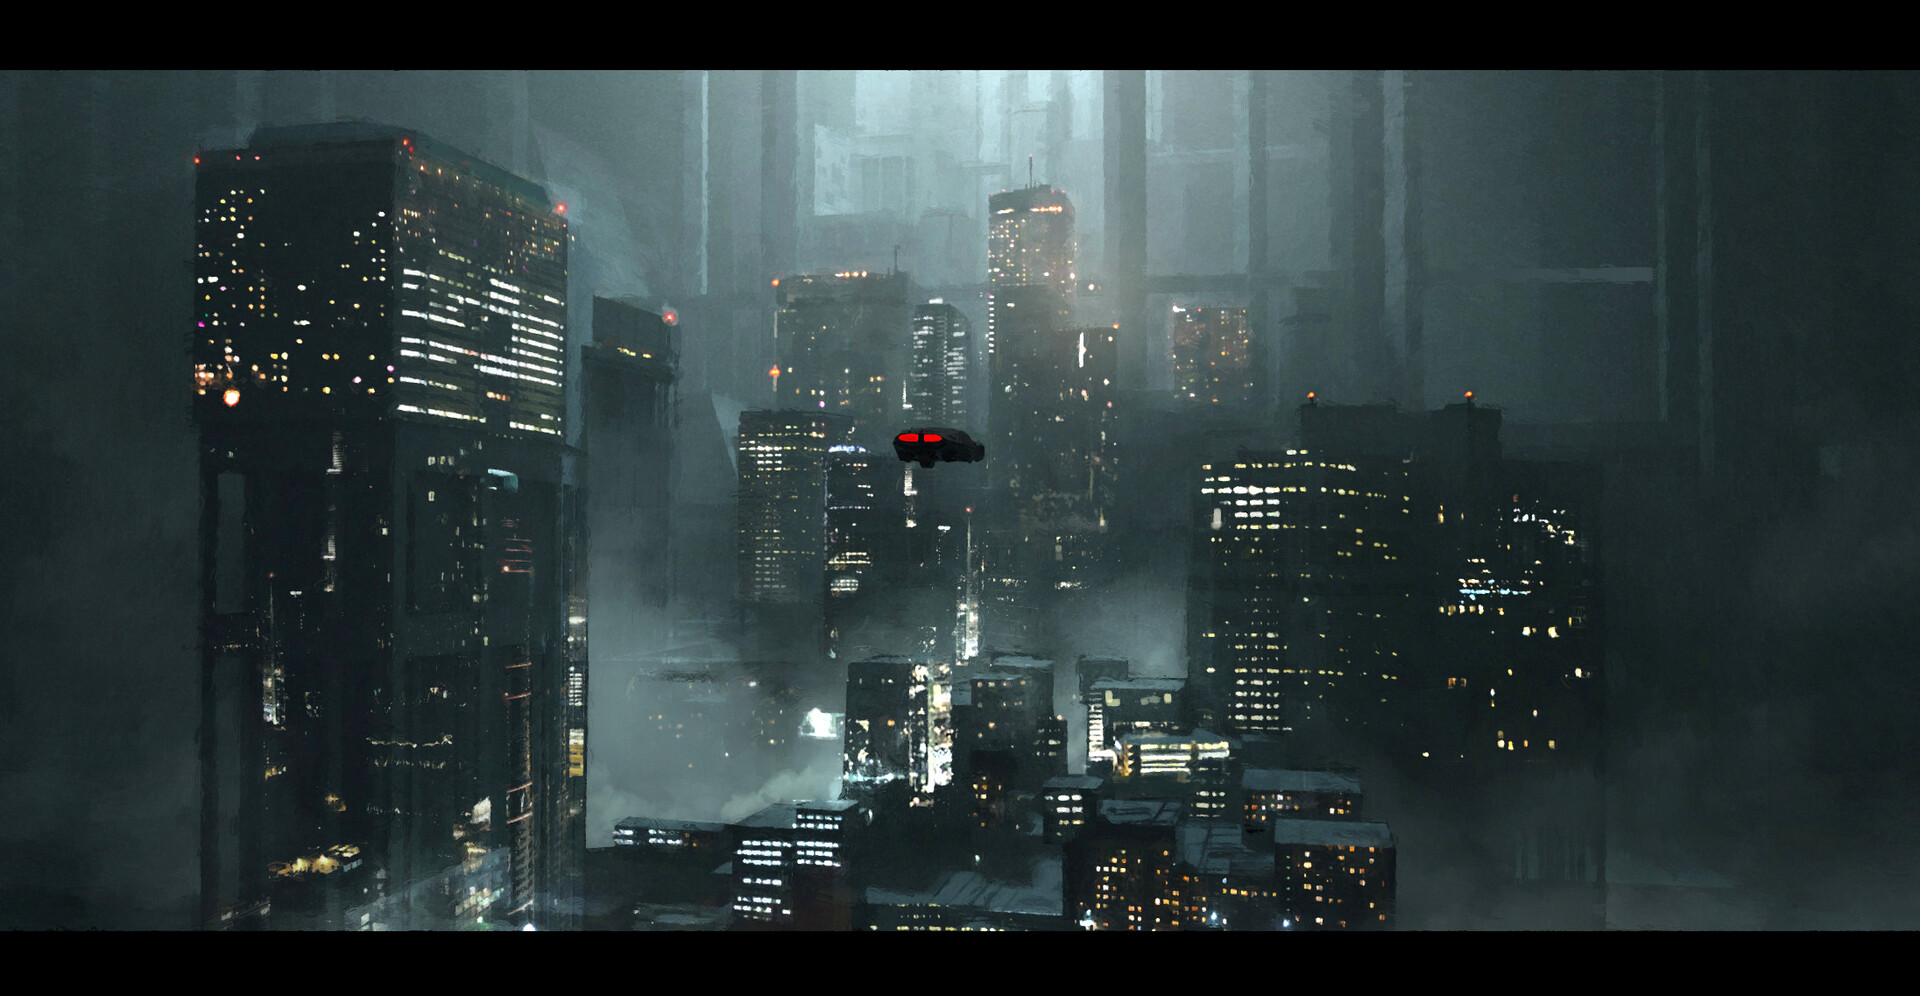 General 1920x996 Neo-noir Blade Runner Blade Runner 2049 cyberpunk city futuristic futurism flying car